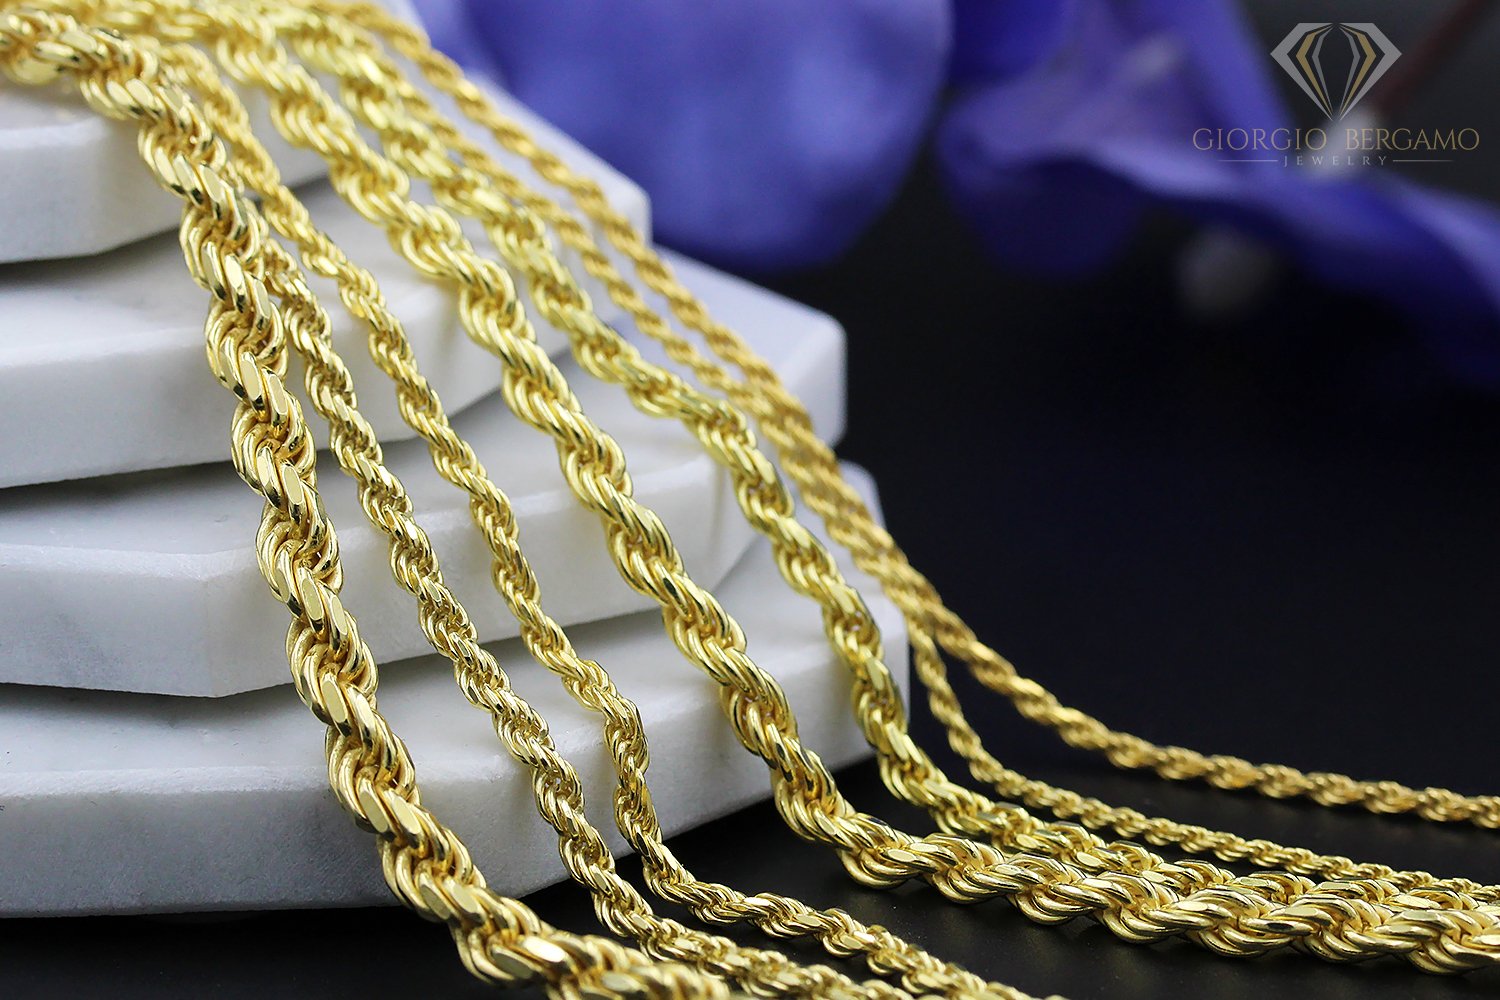 Buy 14k Yellow Gold Solid 3mm Diamond Cut Rope Chain Bracelet, 7